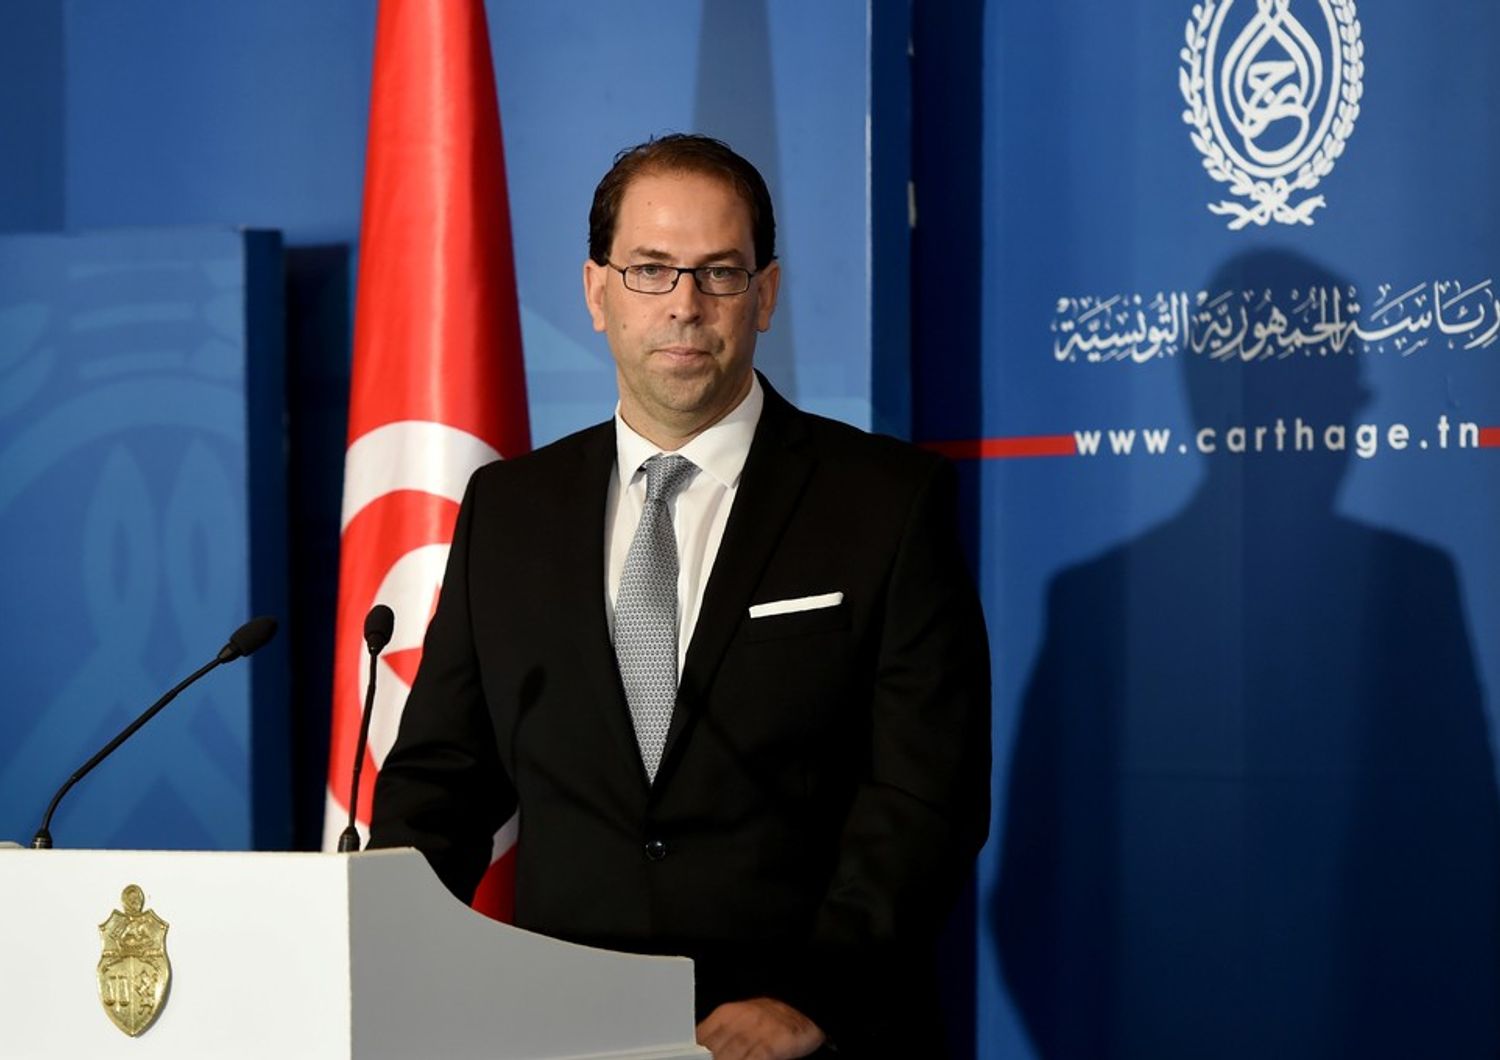 Tunisia premier Youssef Chahed&nbsp;(Afp)